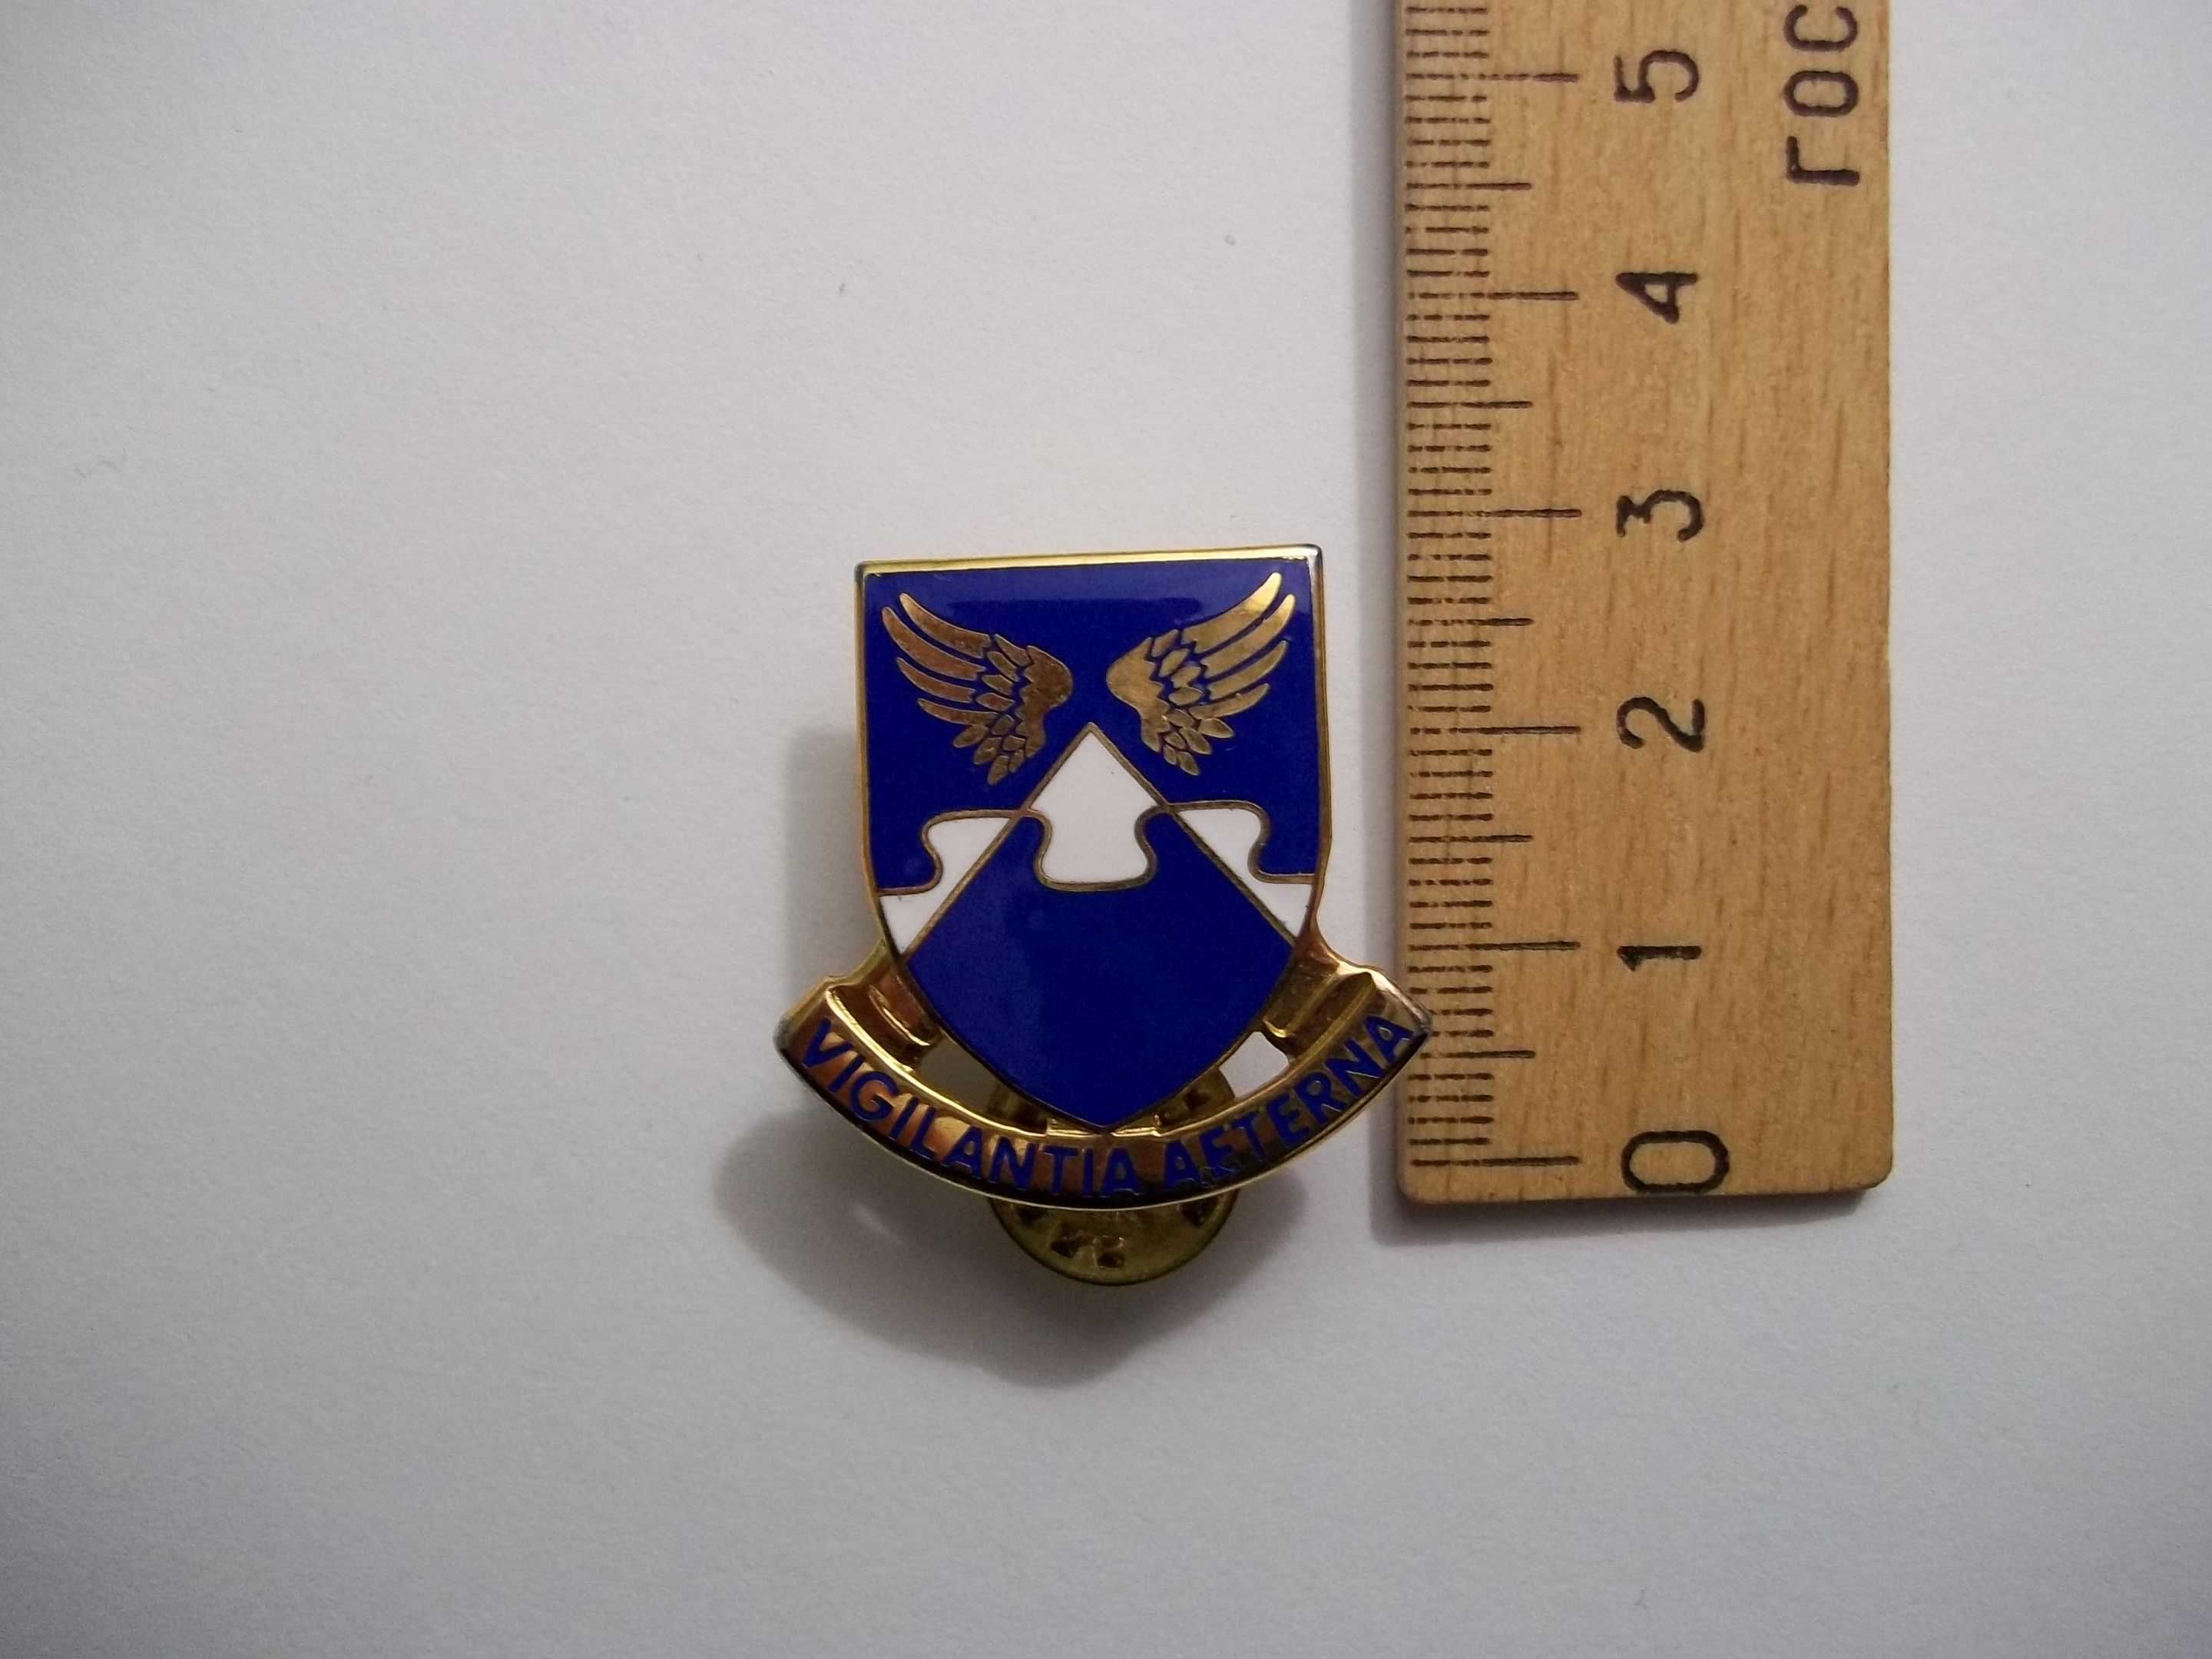 Значек, Знак, на форму, Армии США, маркировка, клеймо, оригинал